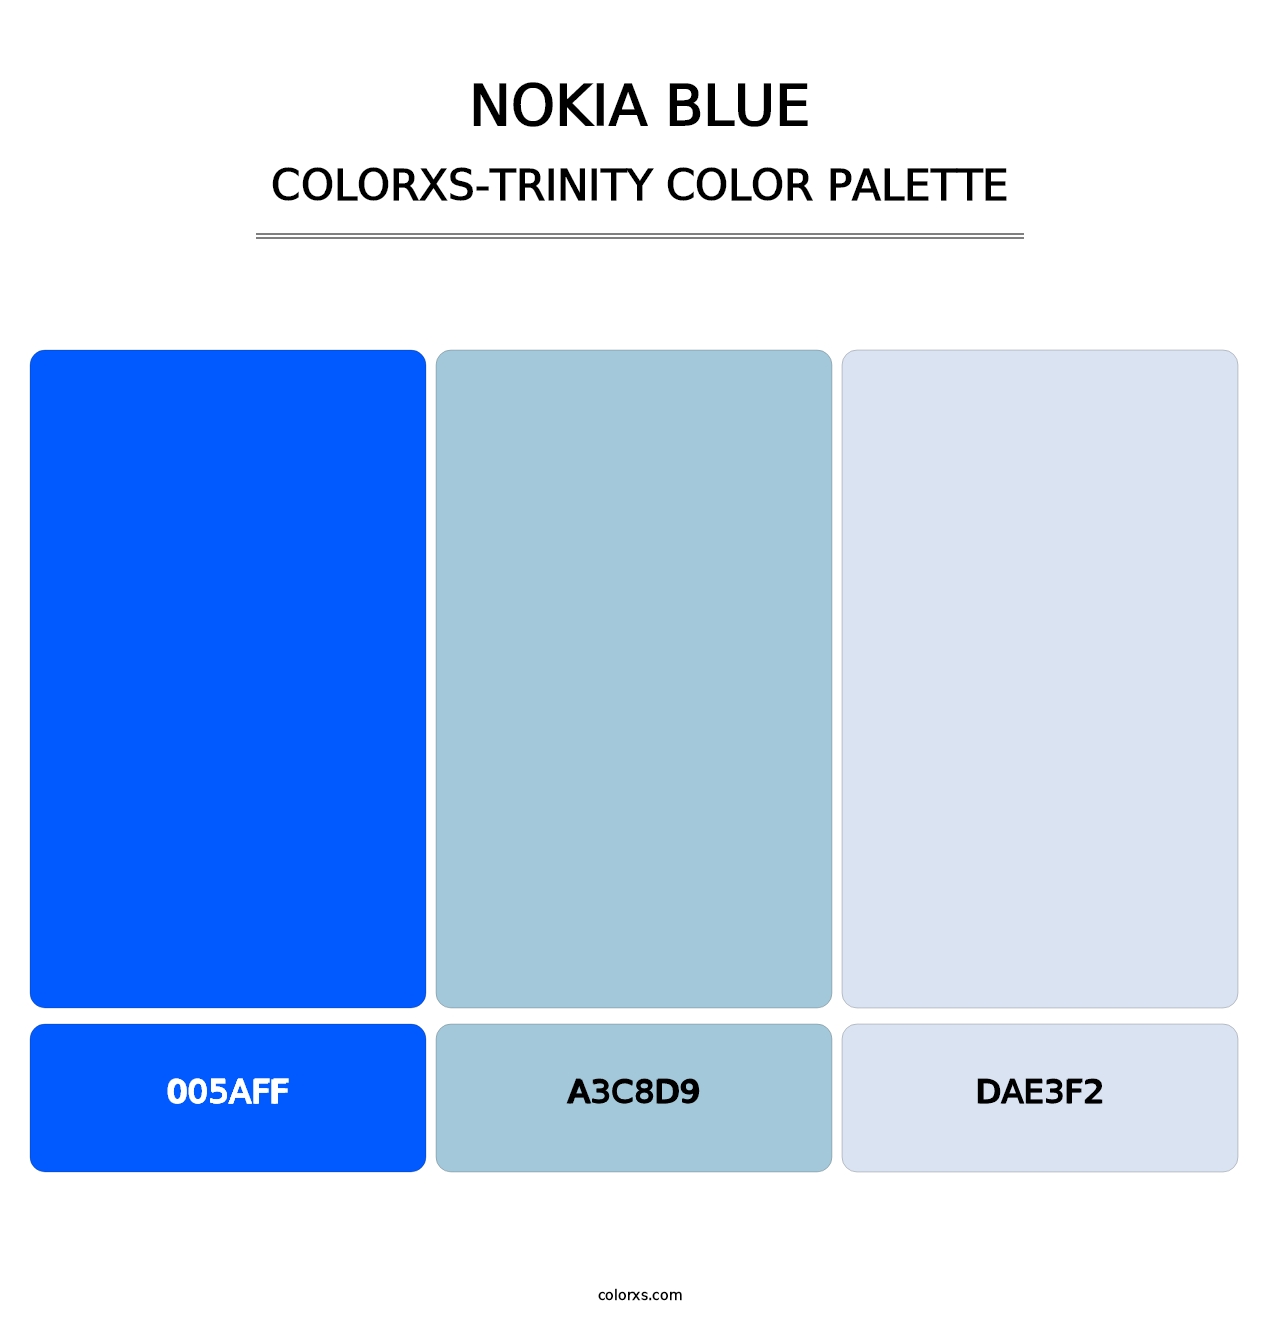 Nokia Blue - Colorxs Trinity Palette